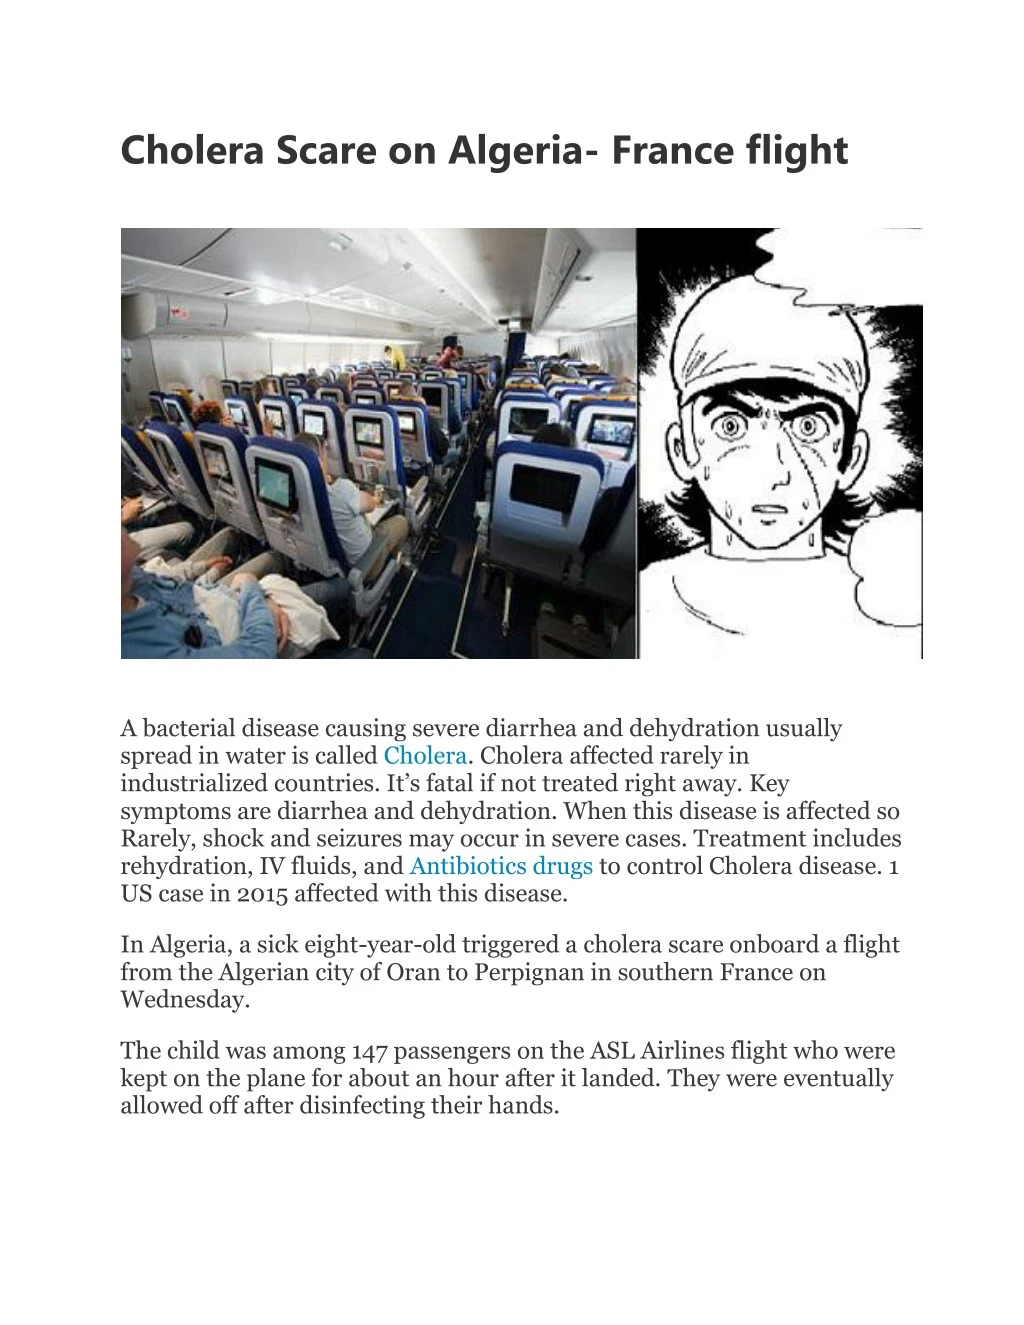 cholera scare on algeria france flight